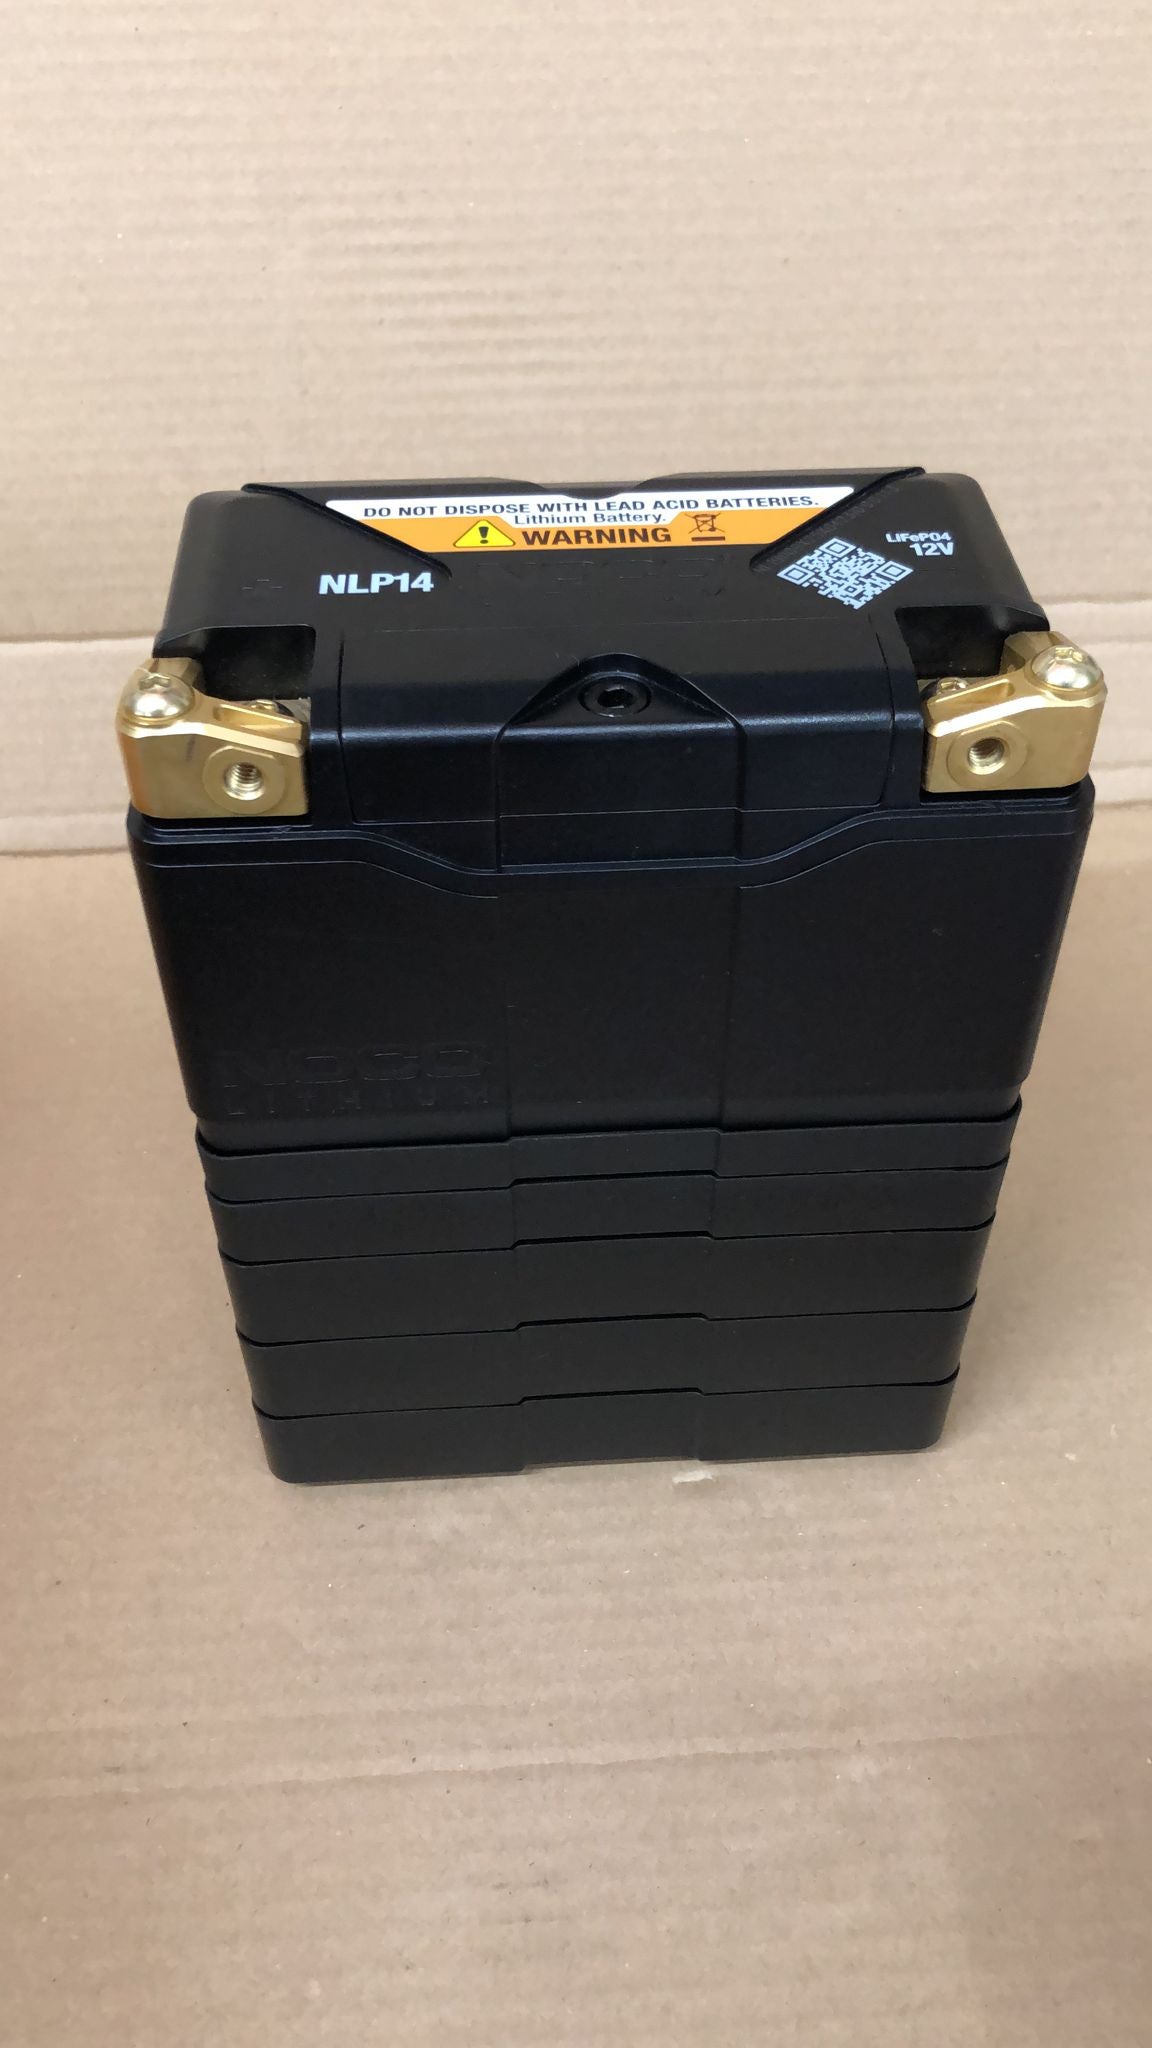 NOCO Lithium Powersport Battery, 500A 12V 4Ah NLP14 6190